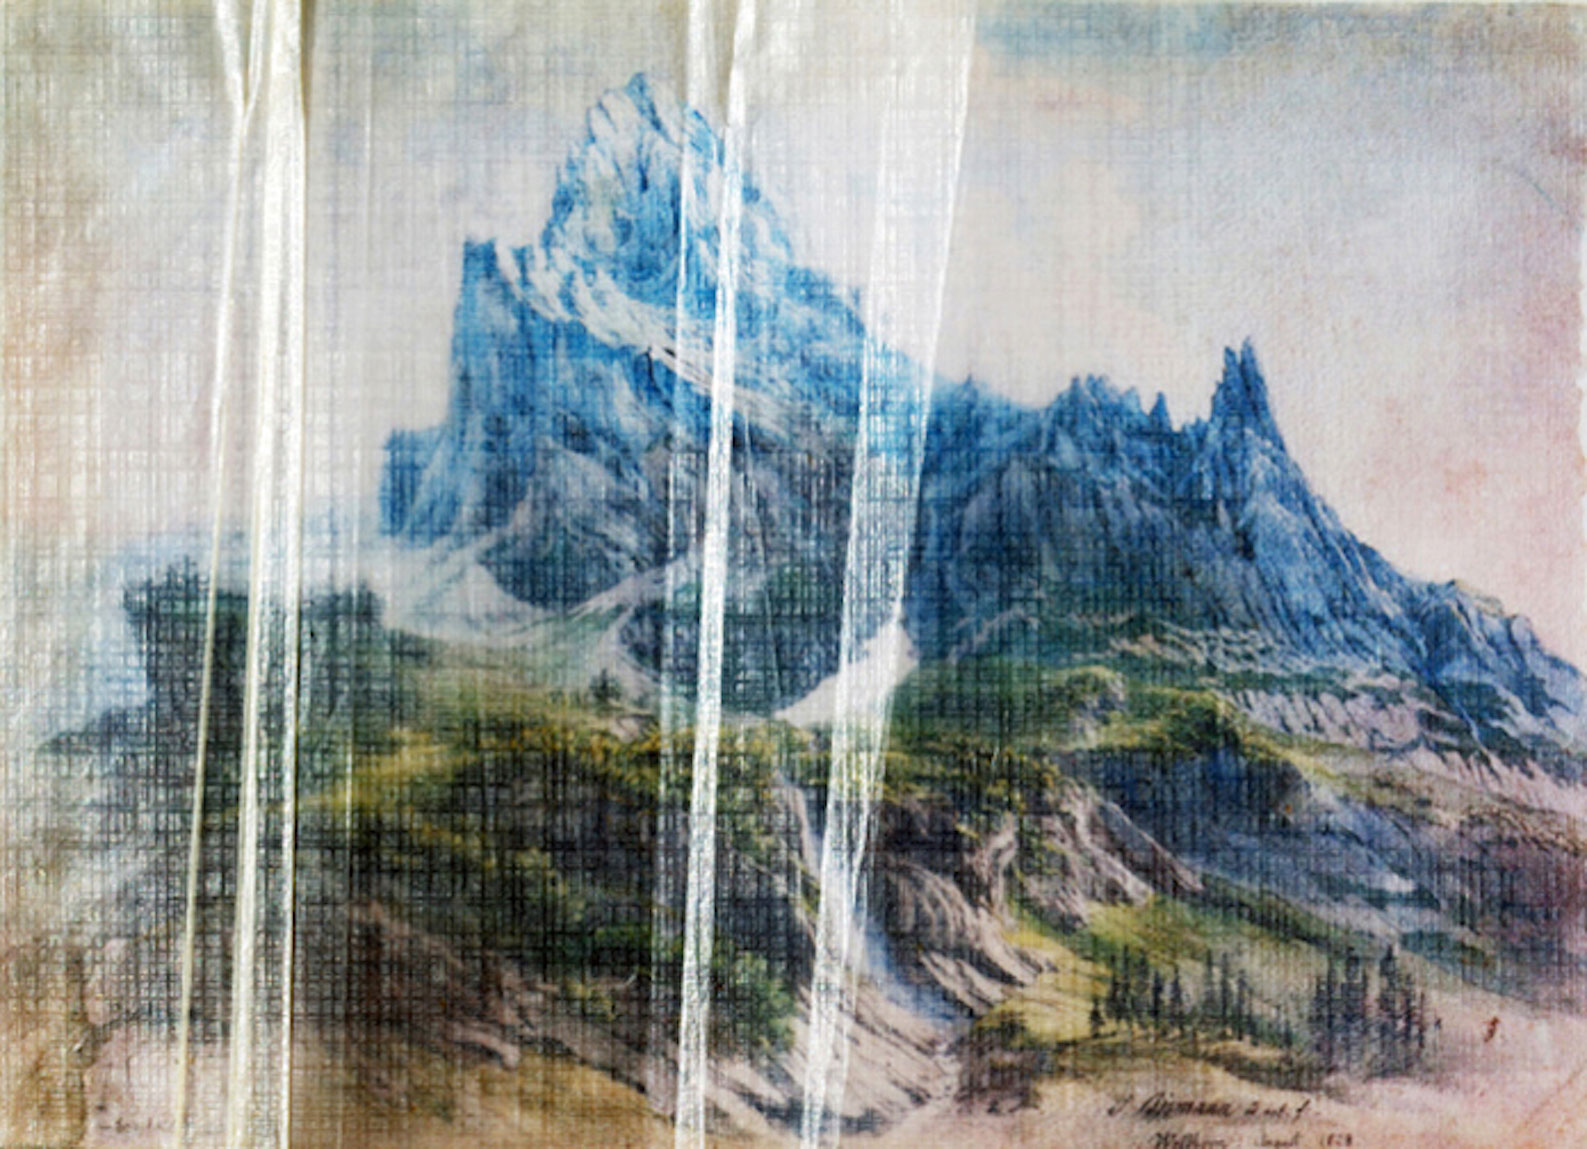 Jorma Puranen, "Landscapes in Full Color 2 (Birmann)", 2012, digital c-print, diasec, wooden frame, 149 x 187 cm, (ed 6)